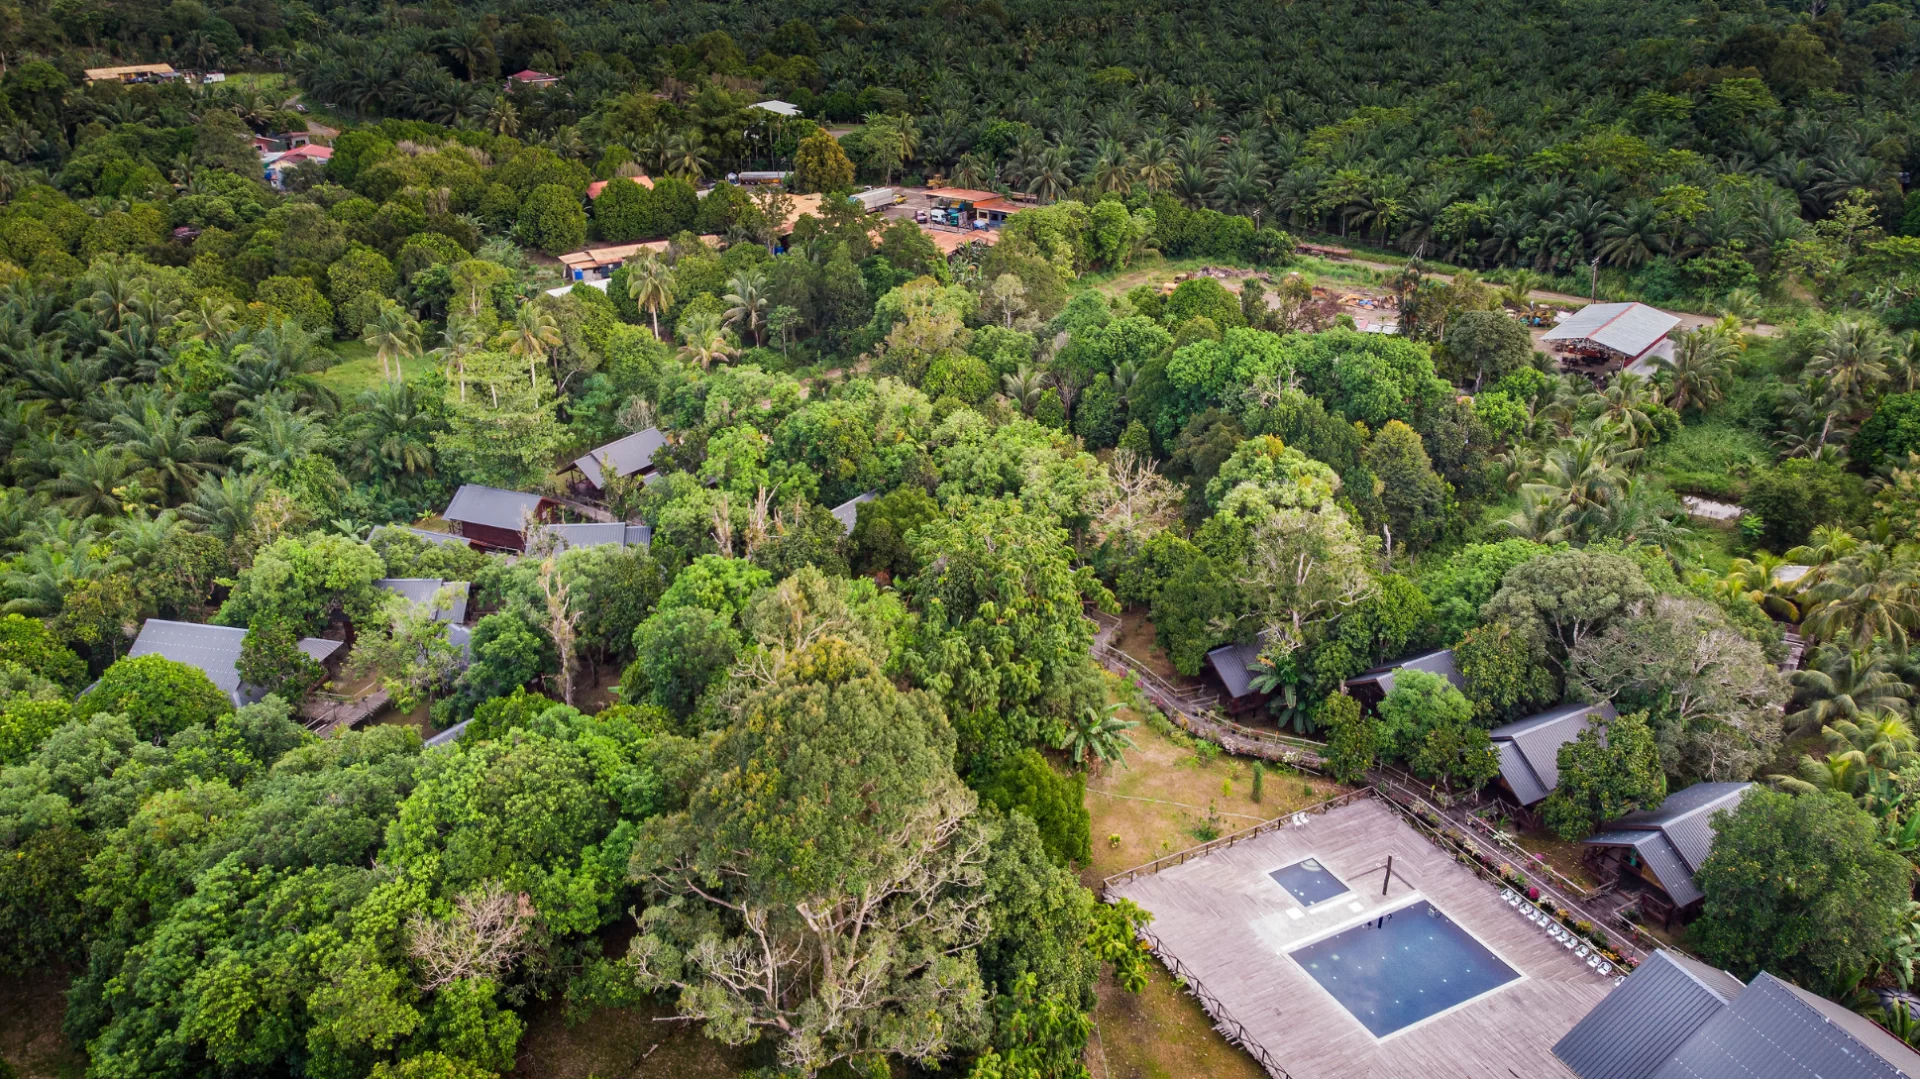 view of 2 chalet at borneo sepilok rainforest resort